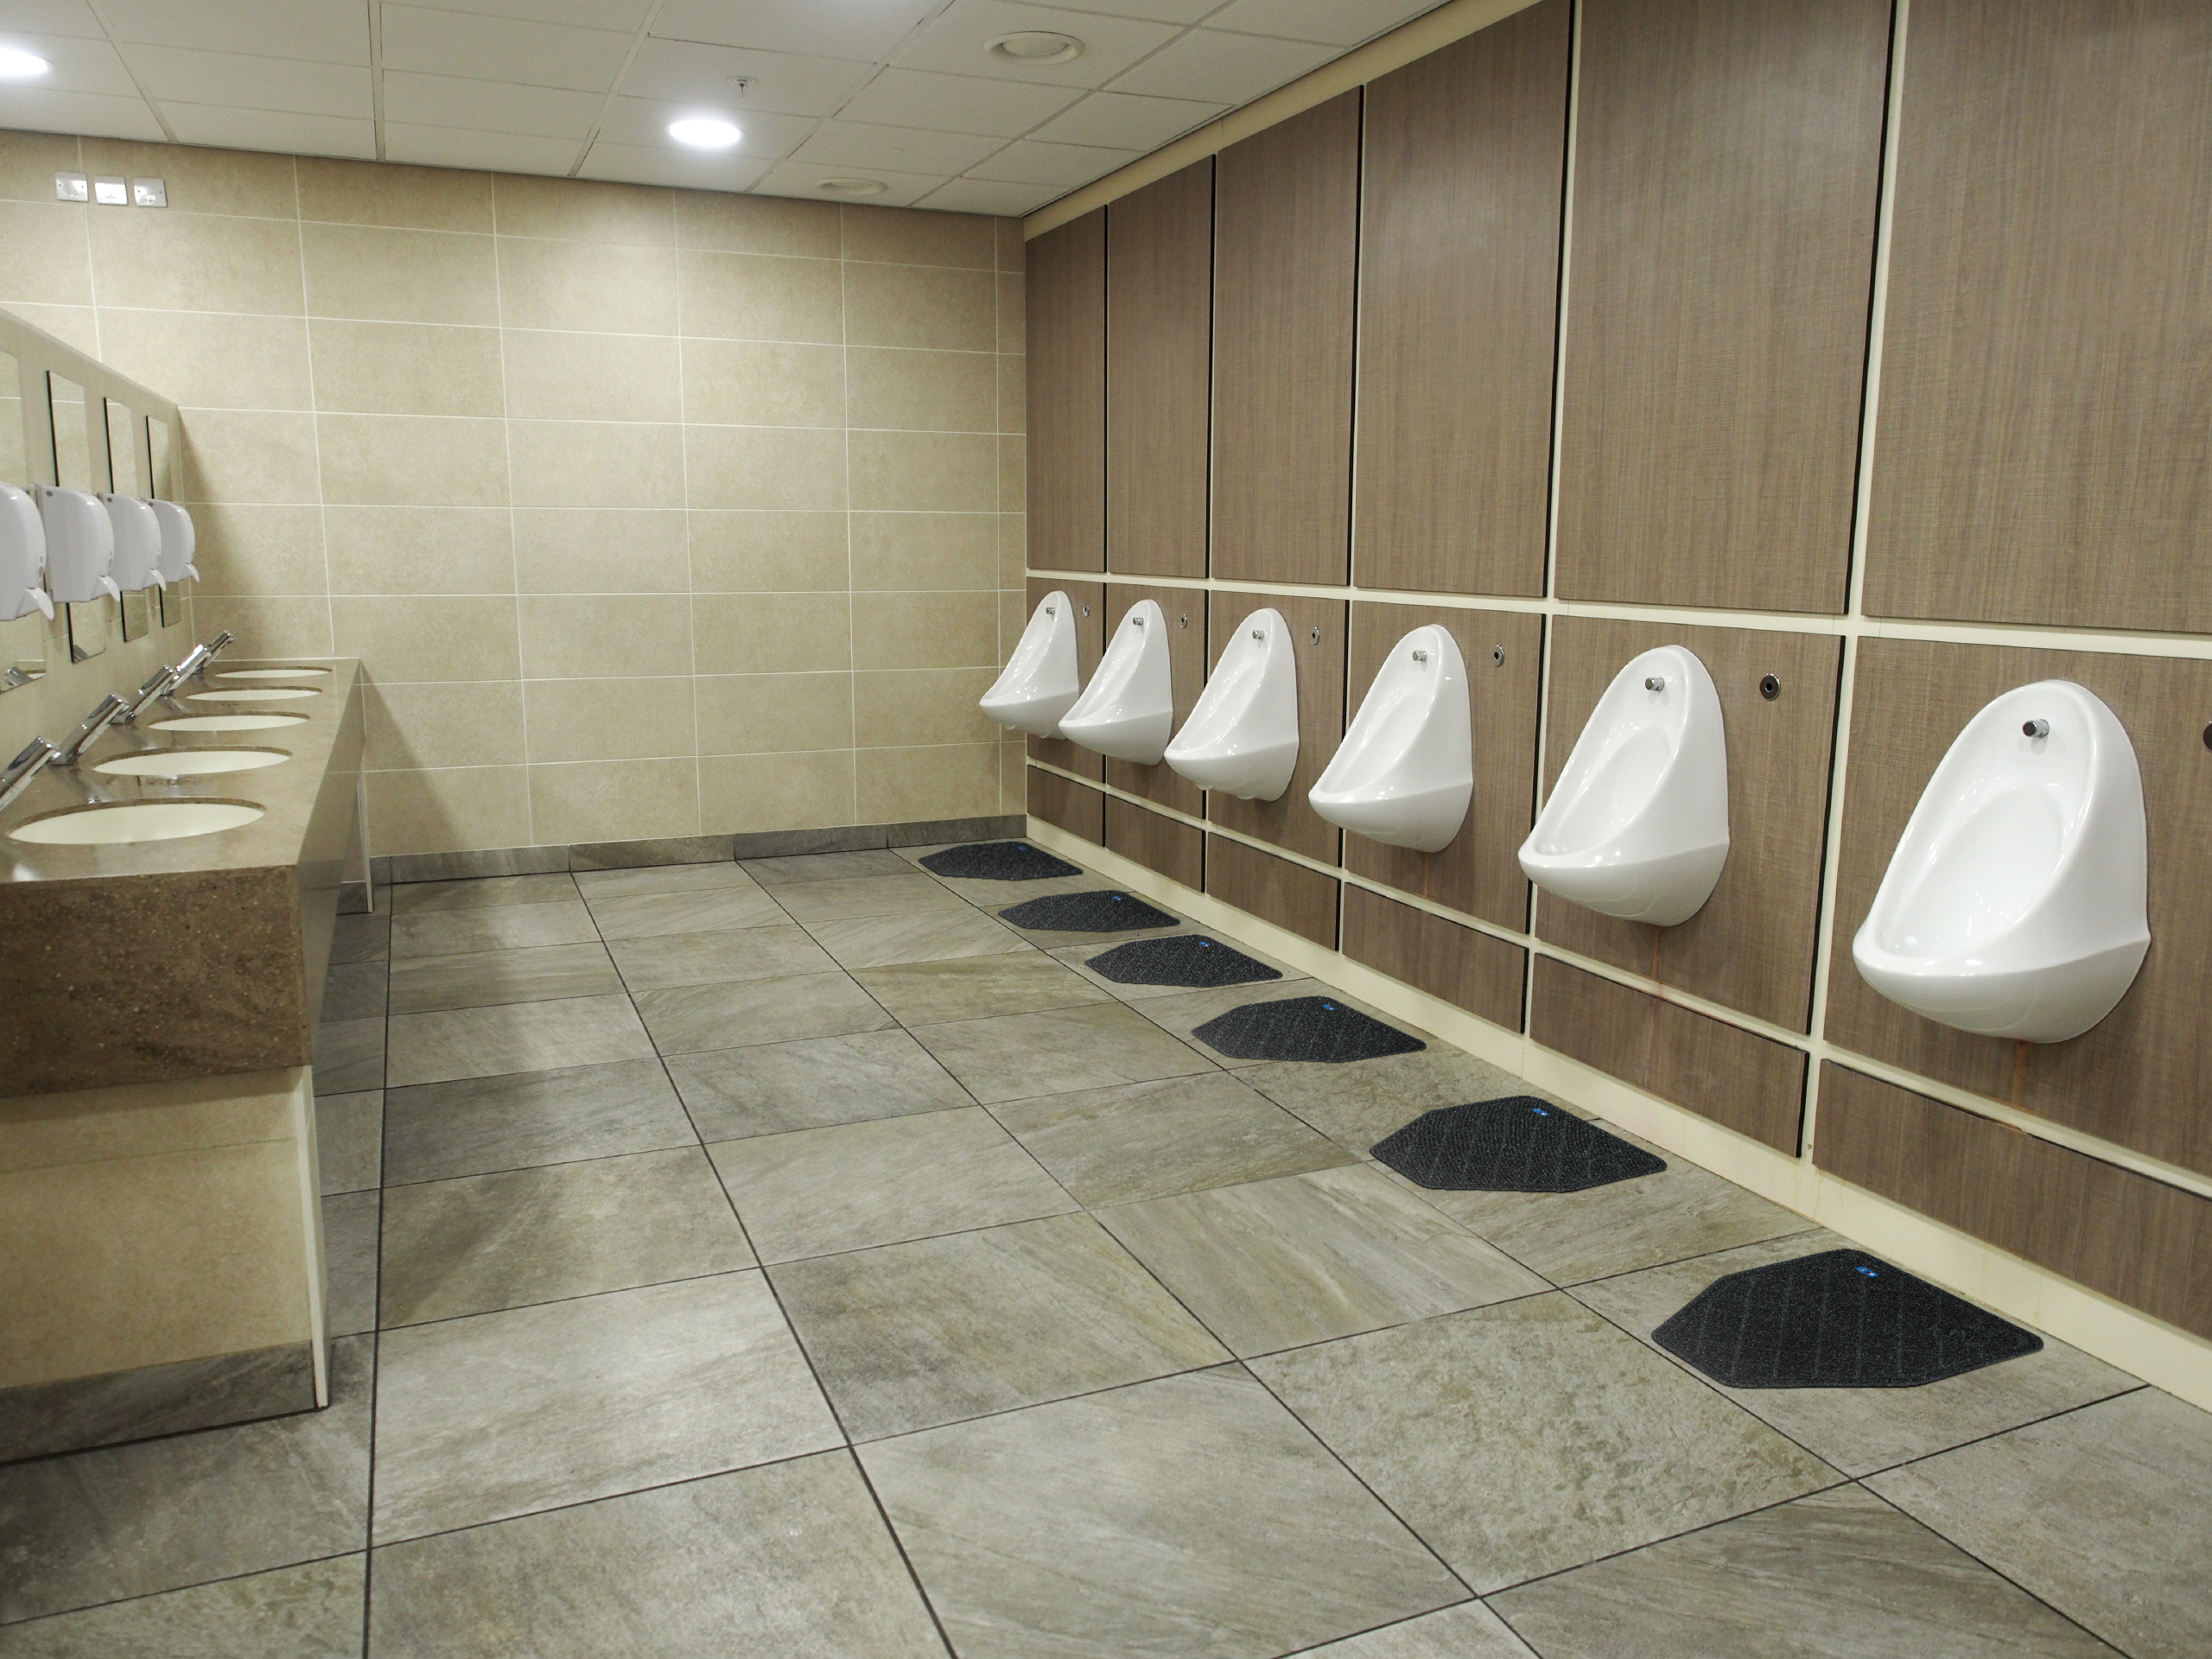 Toilet Floor Mats Commercial Bathroom, Commercial Bathroom Tile